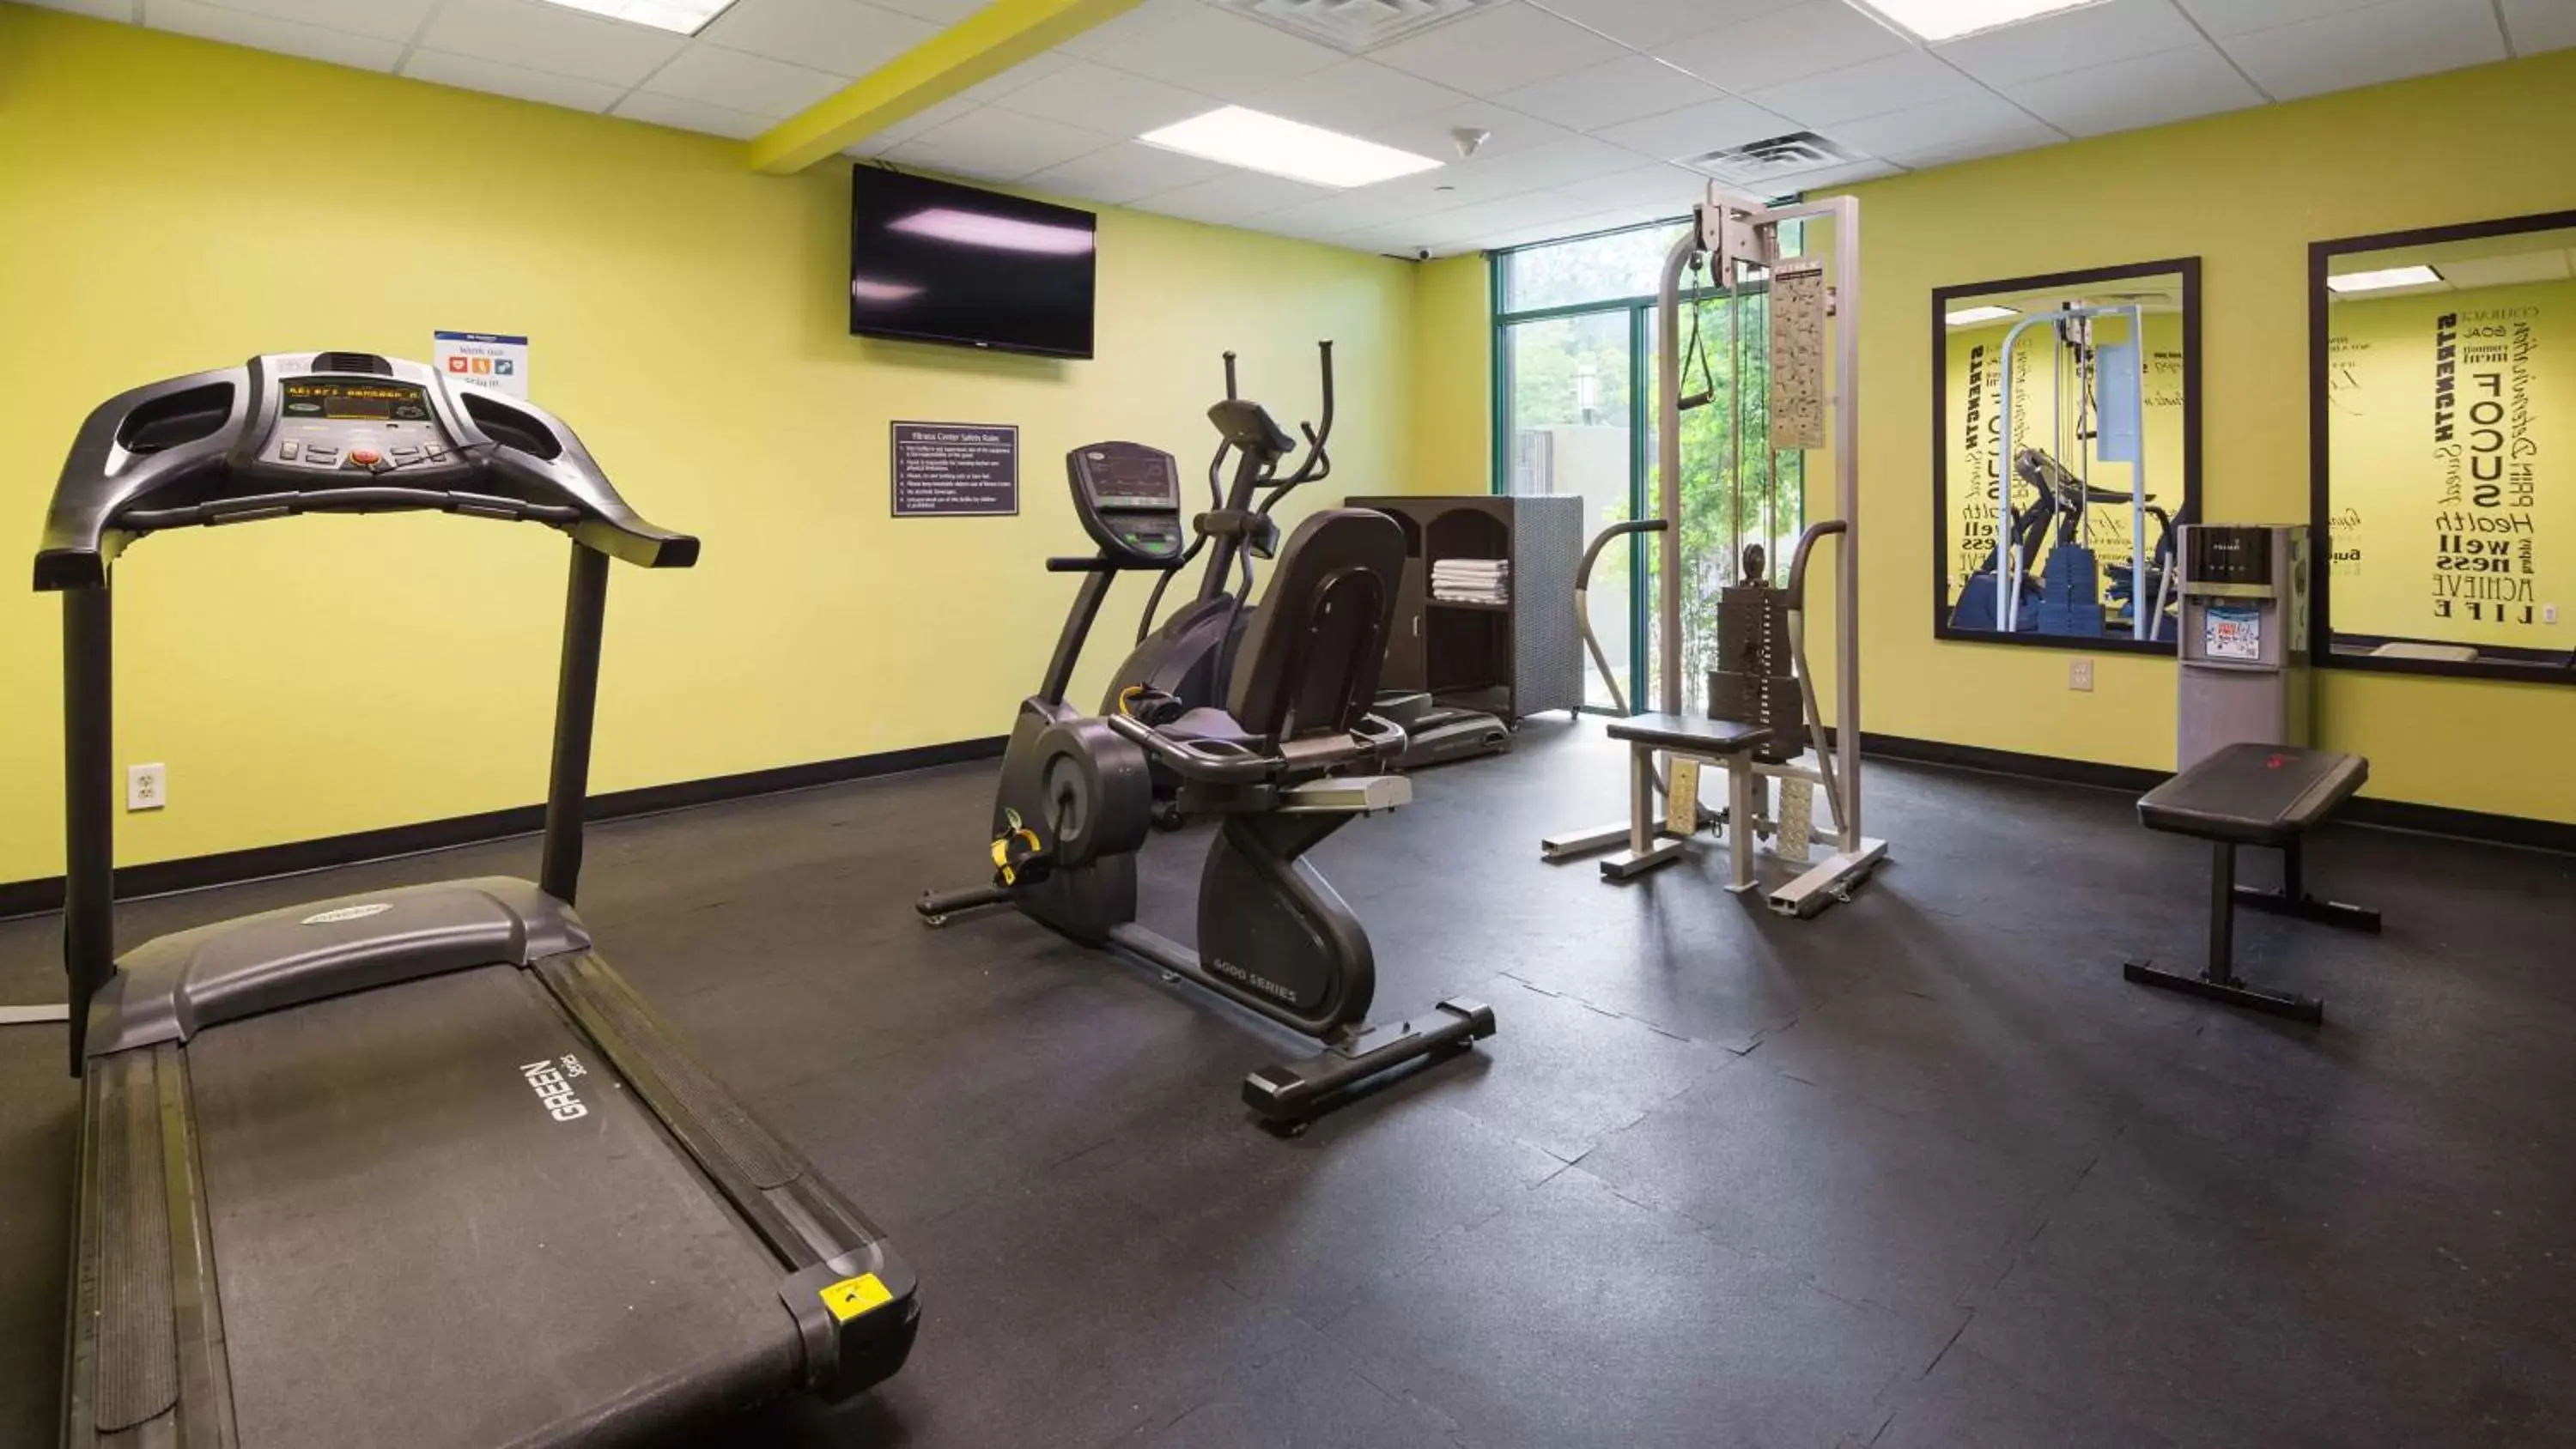 Fitness centre/facilities, Fitness Center/Facilities in Best Western Plus Birmingham Inn & Suites